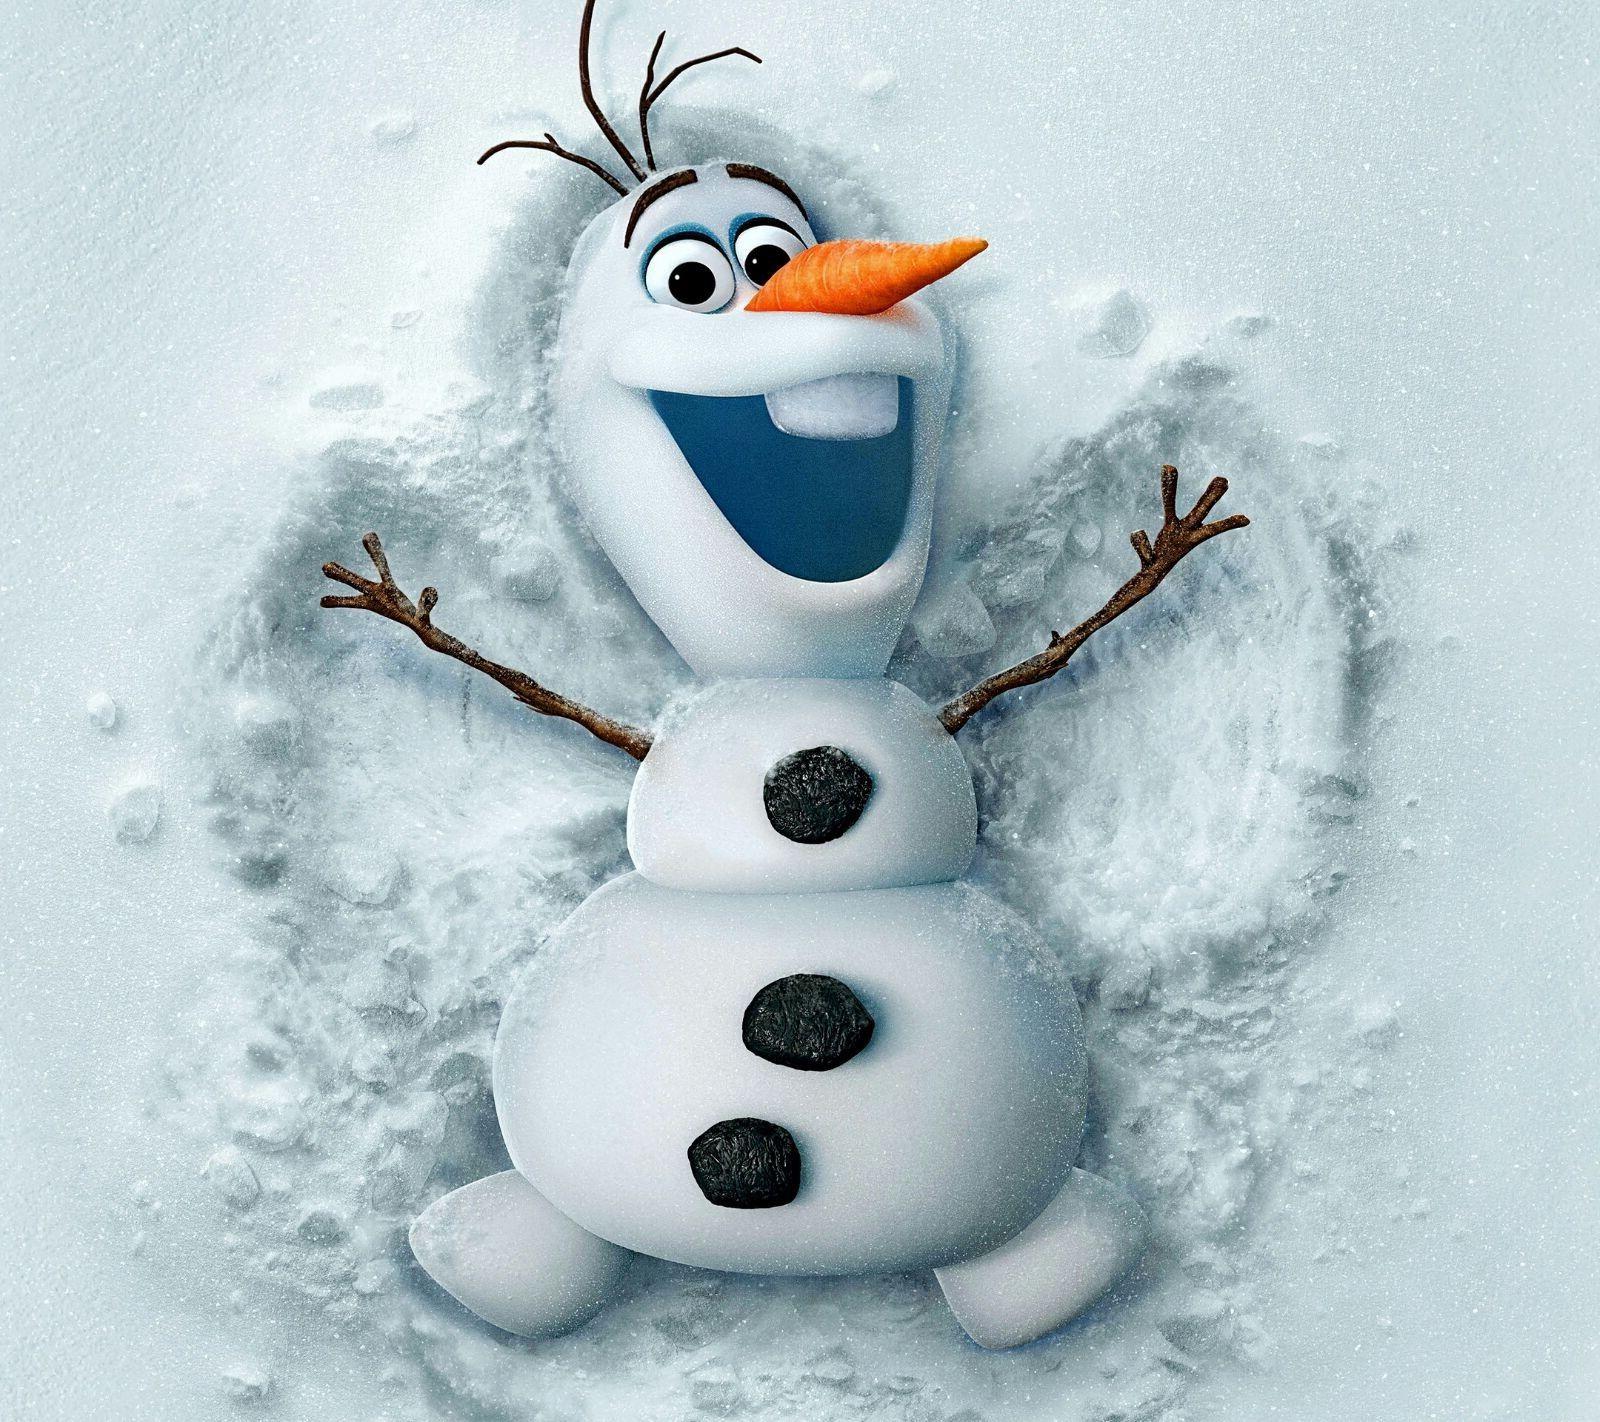 Wallpaper, illustration, snow, cartoon, Frozen movie, snowman, Olaf